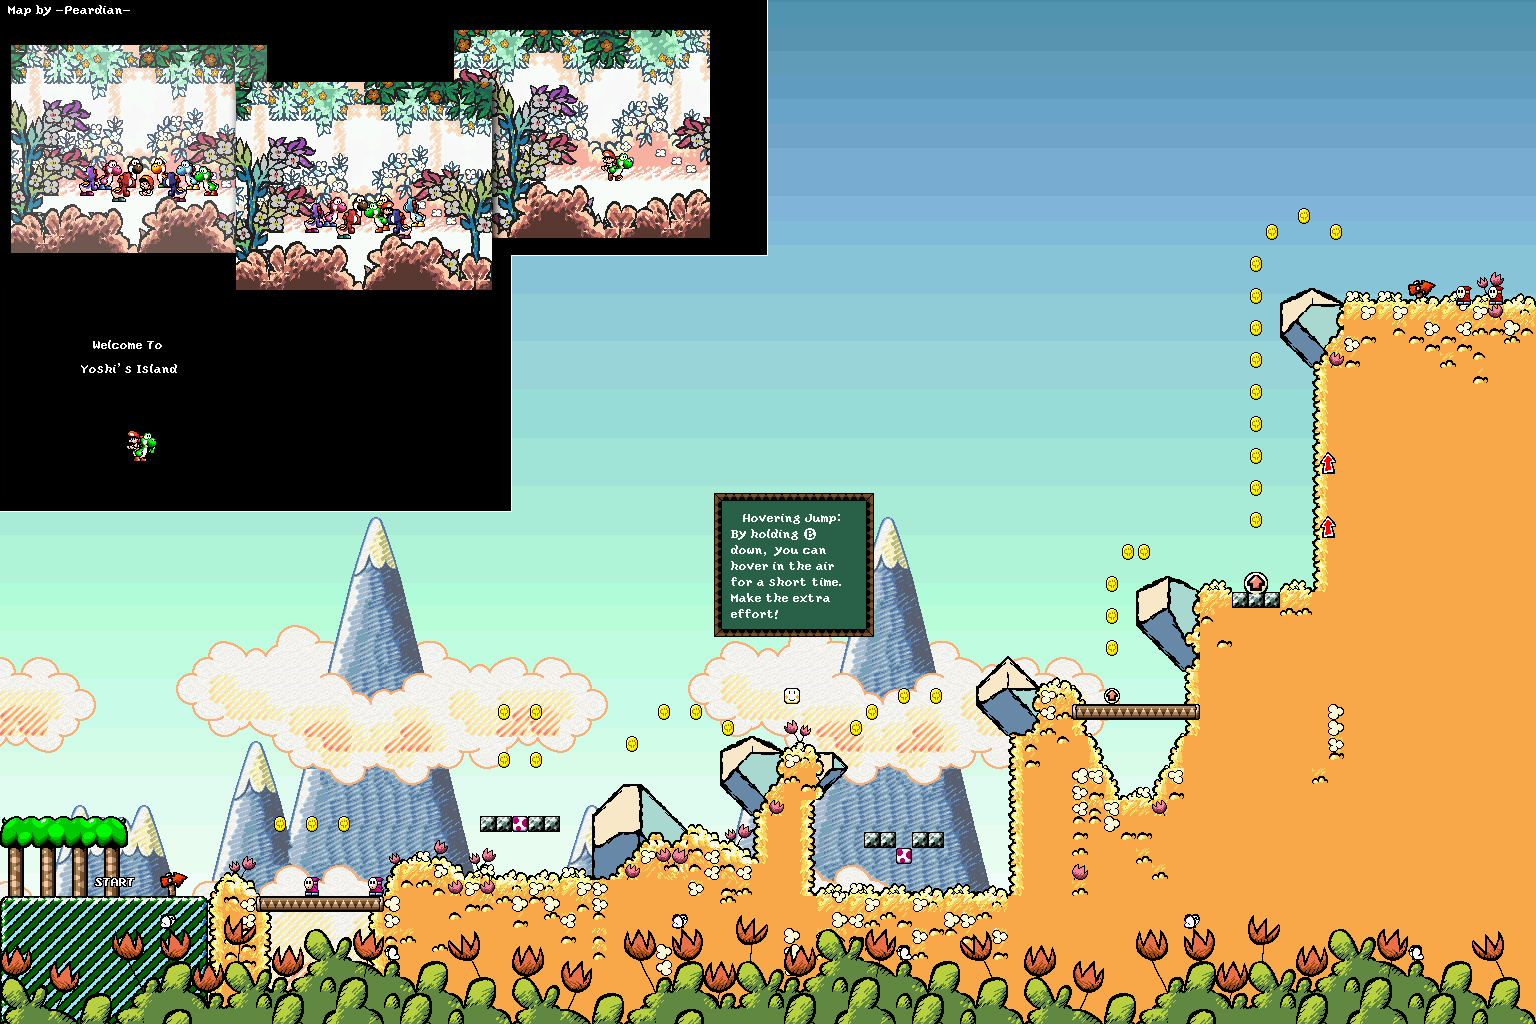 The Making of Super Mario World and Super Mario World 2: Yoshi's